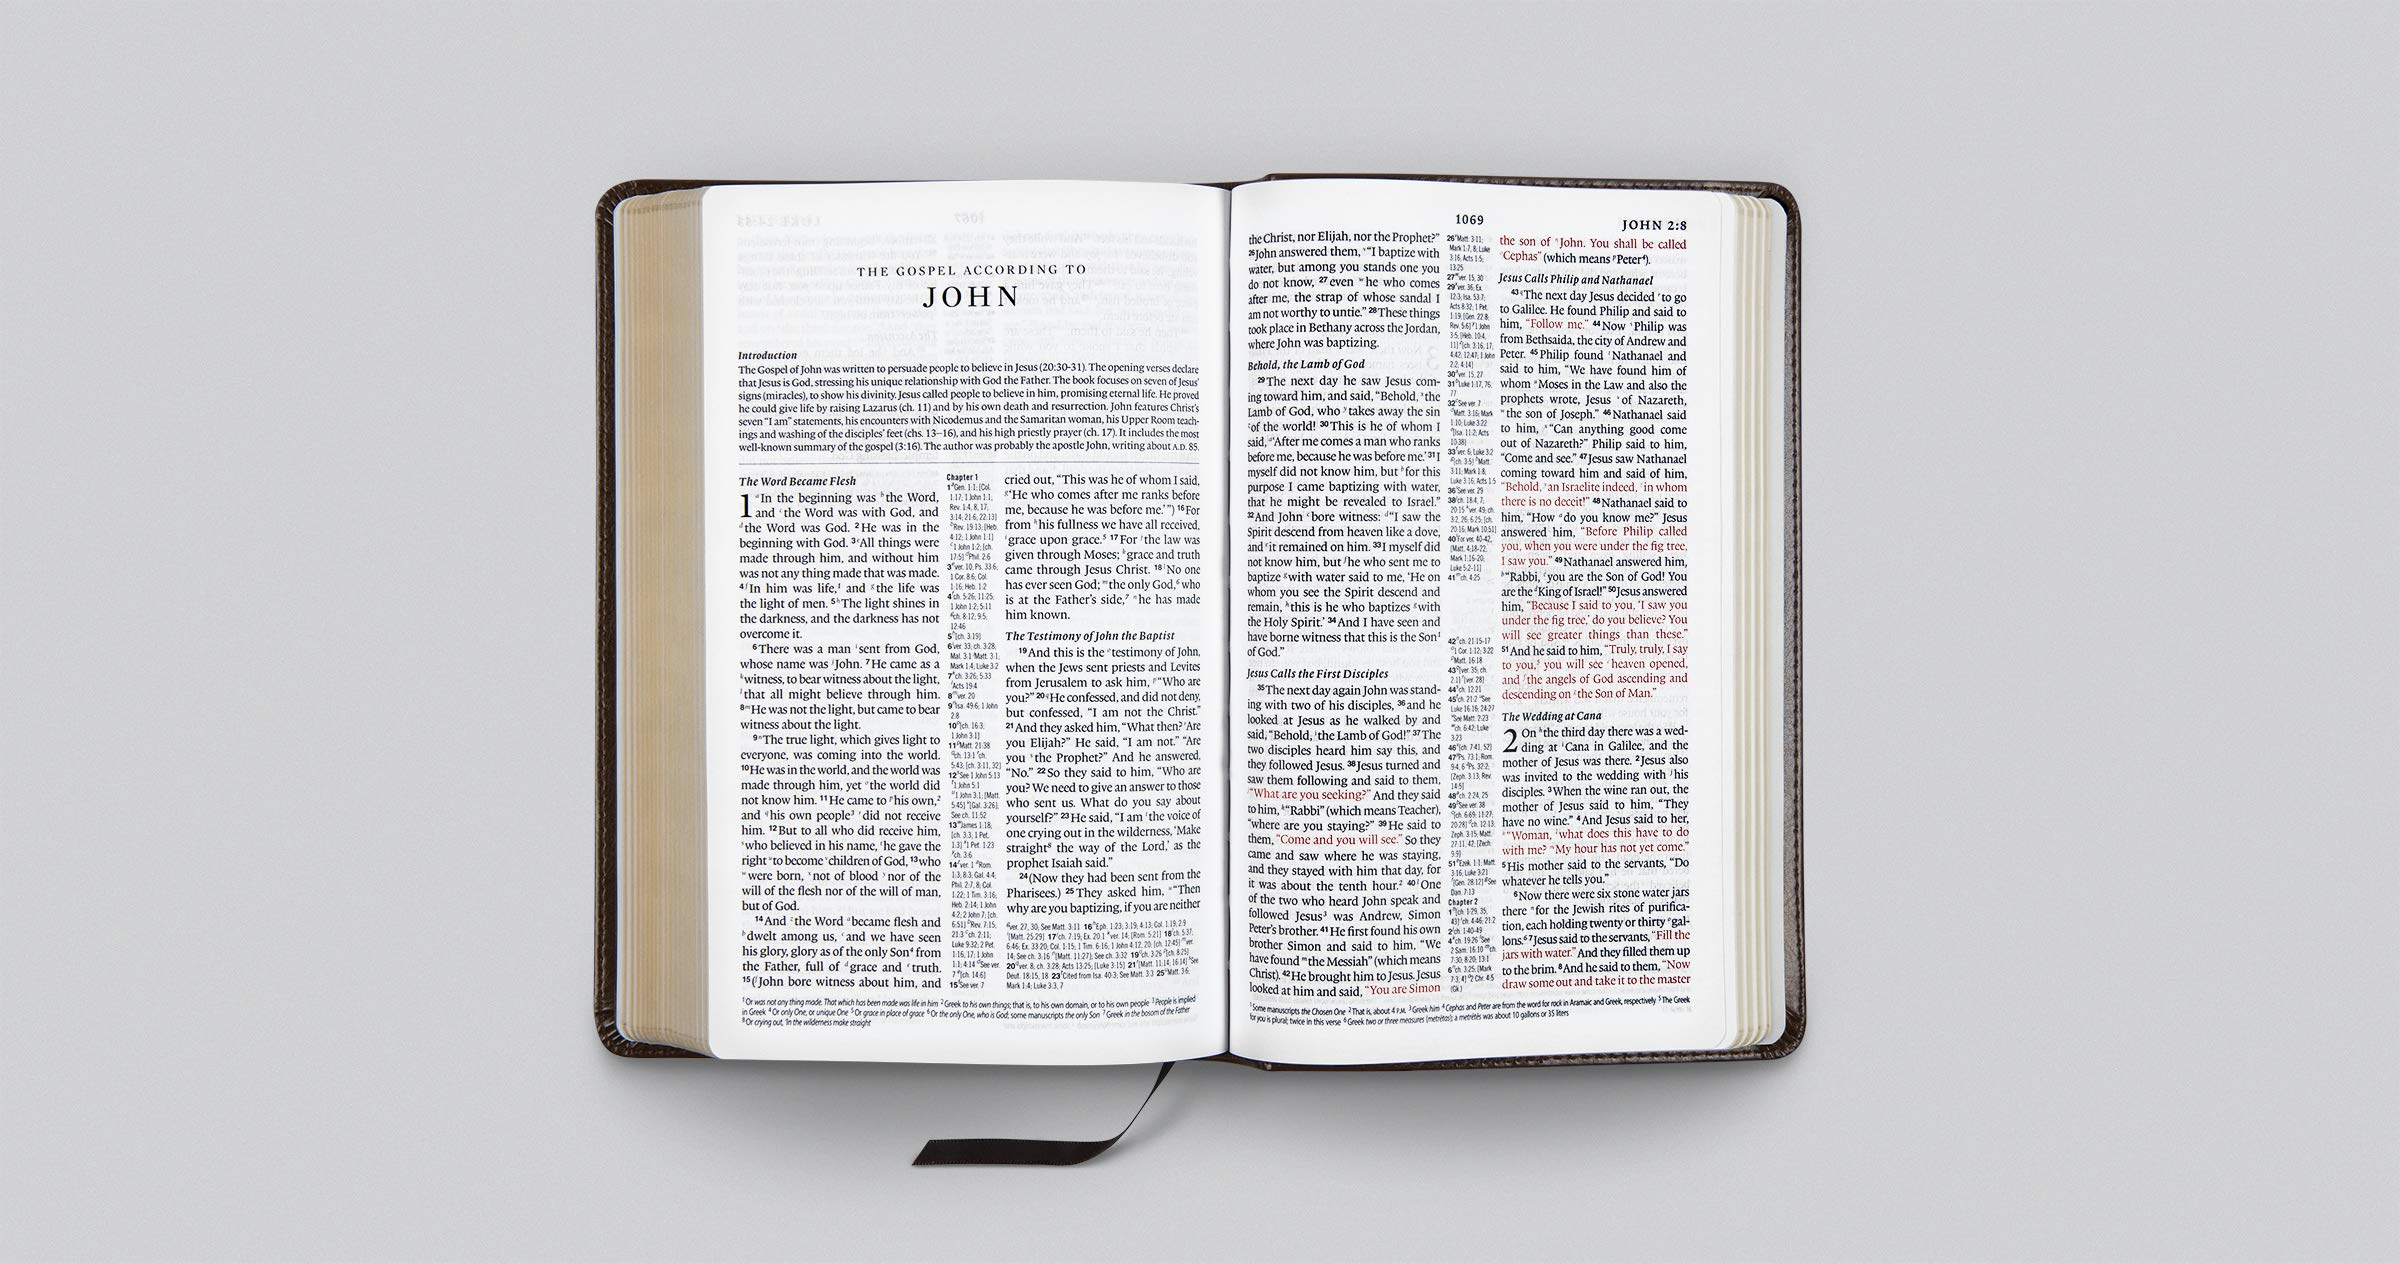 ESV Reference Bible (TruTone, Coffee)